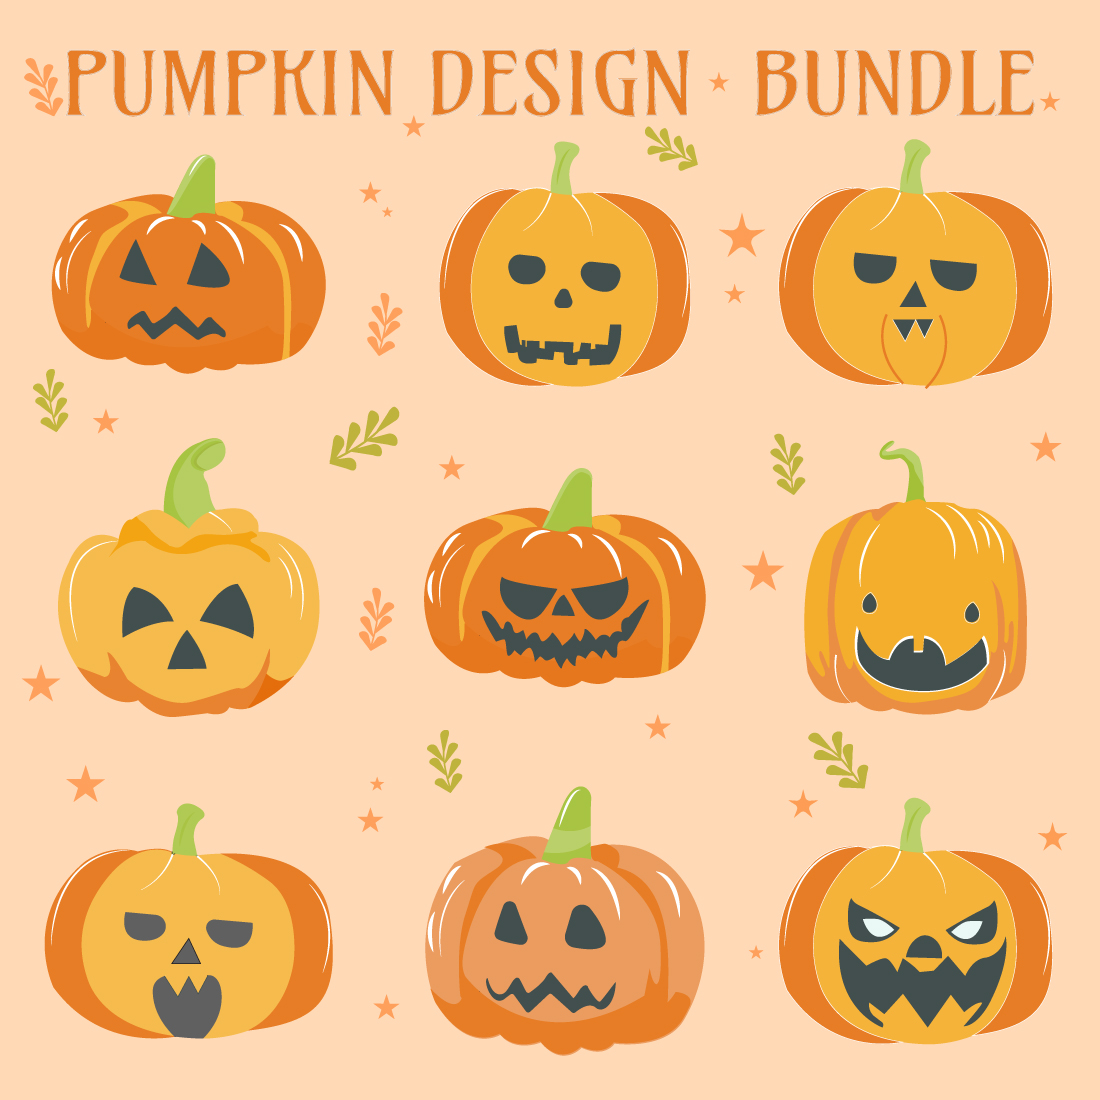 Set of Halloween Pumpkin bundle Vector Art, Clipart pumpkin vector elements preview image.